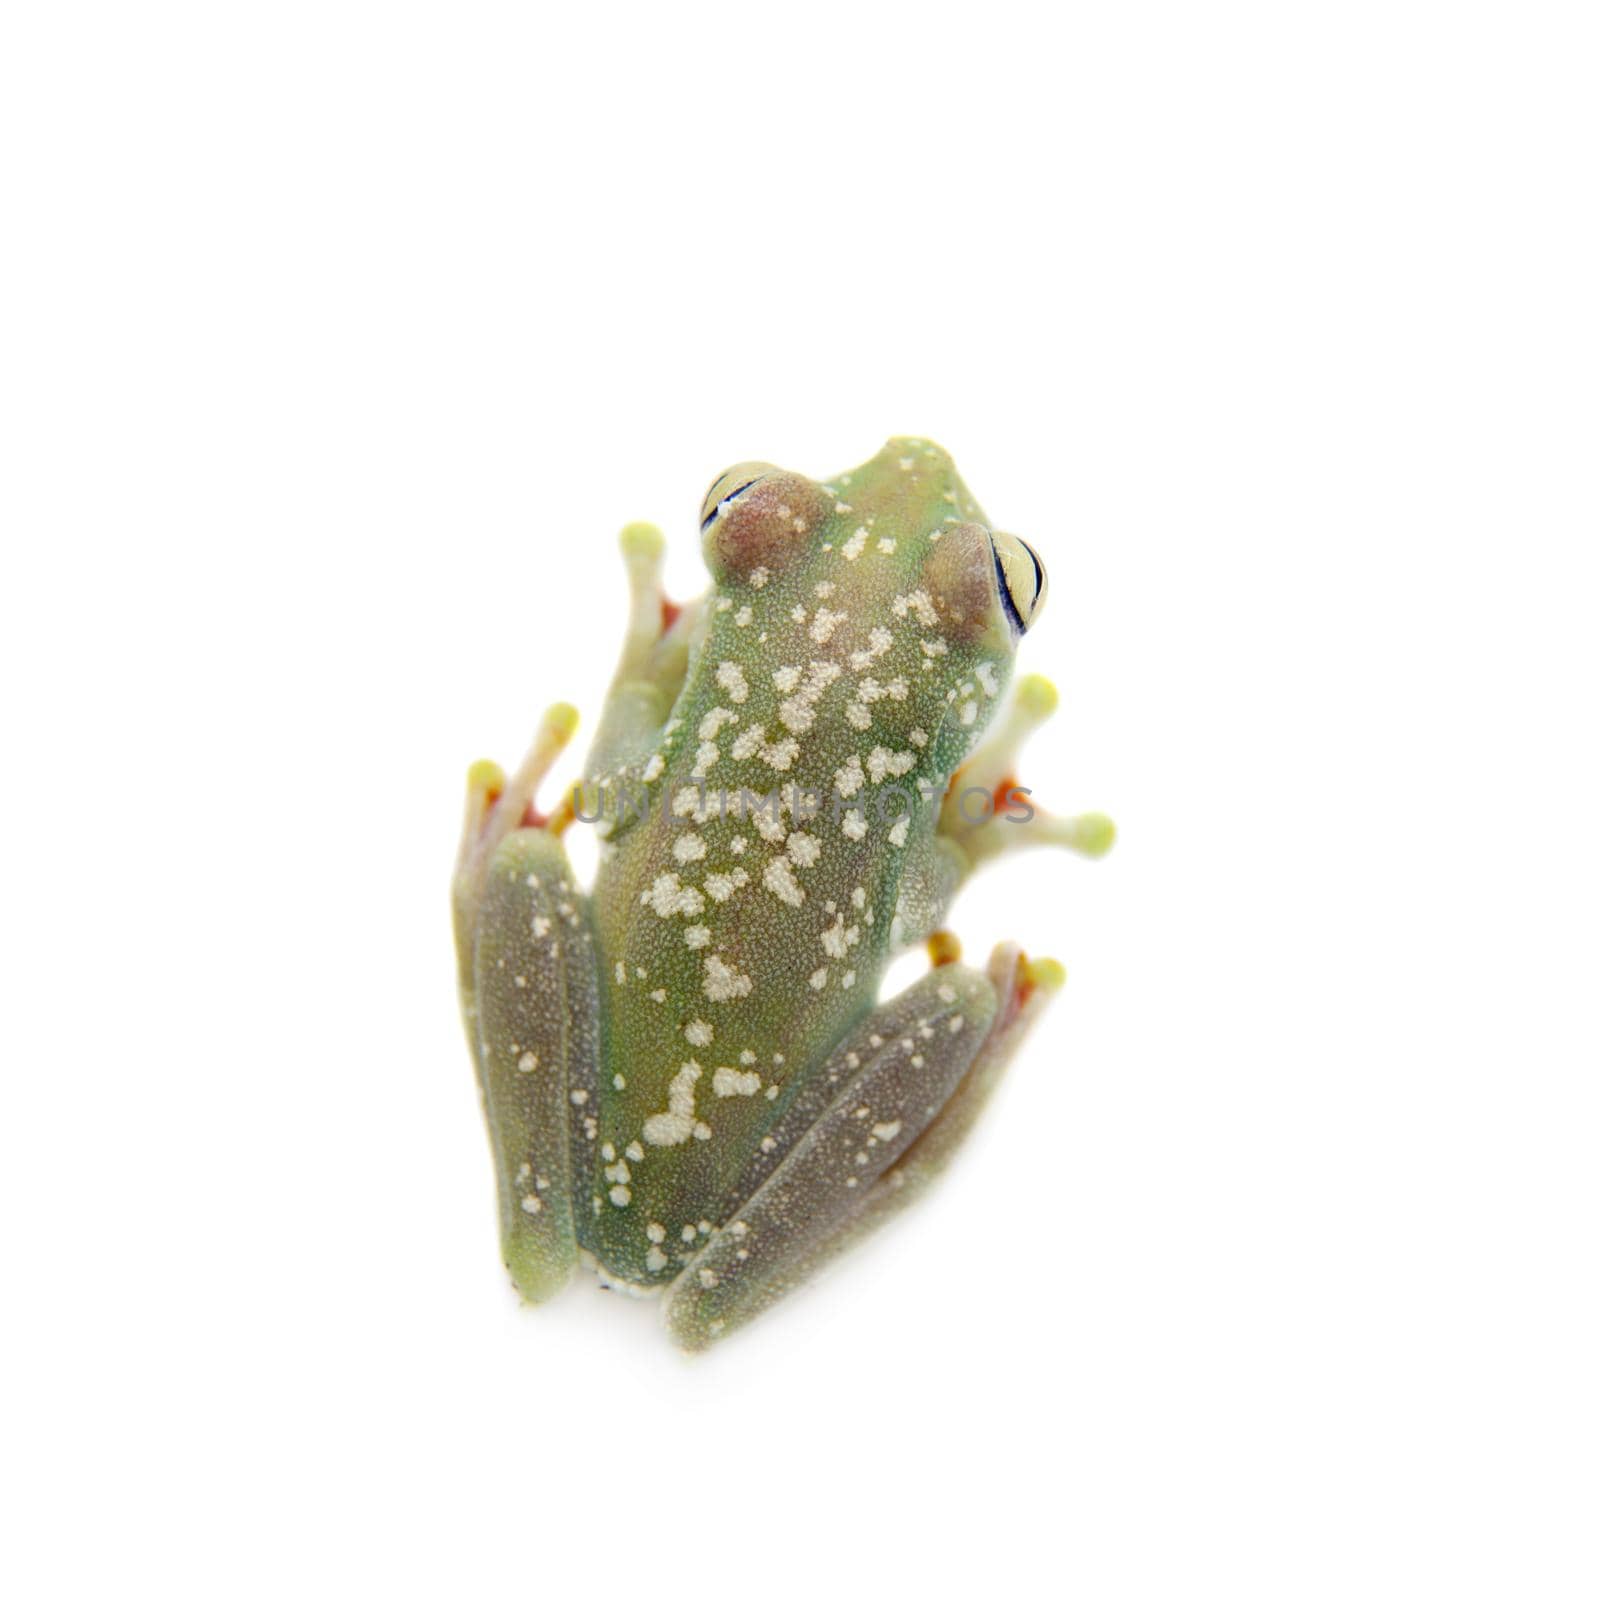 The Canal Zone tree frog, Hypsiboas rufitelus, isolated on white